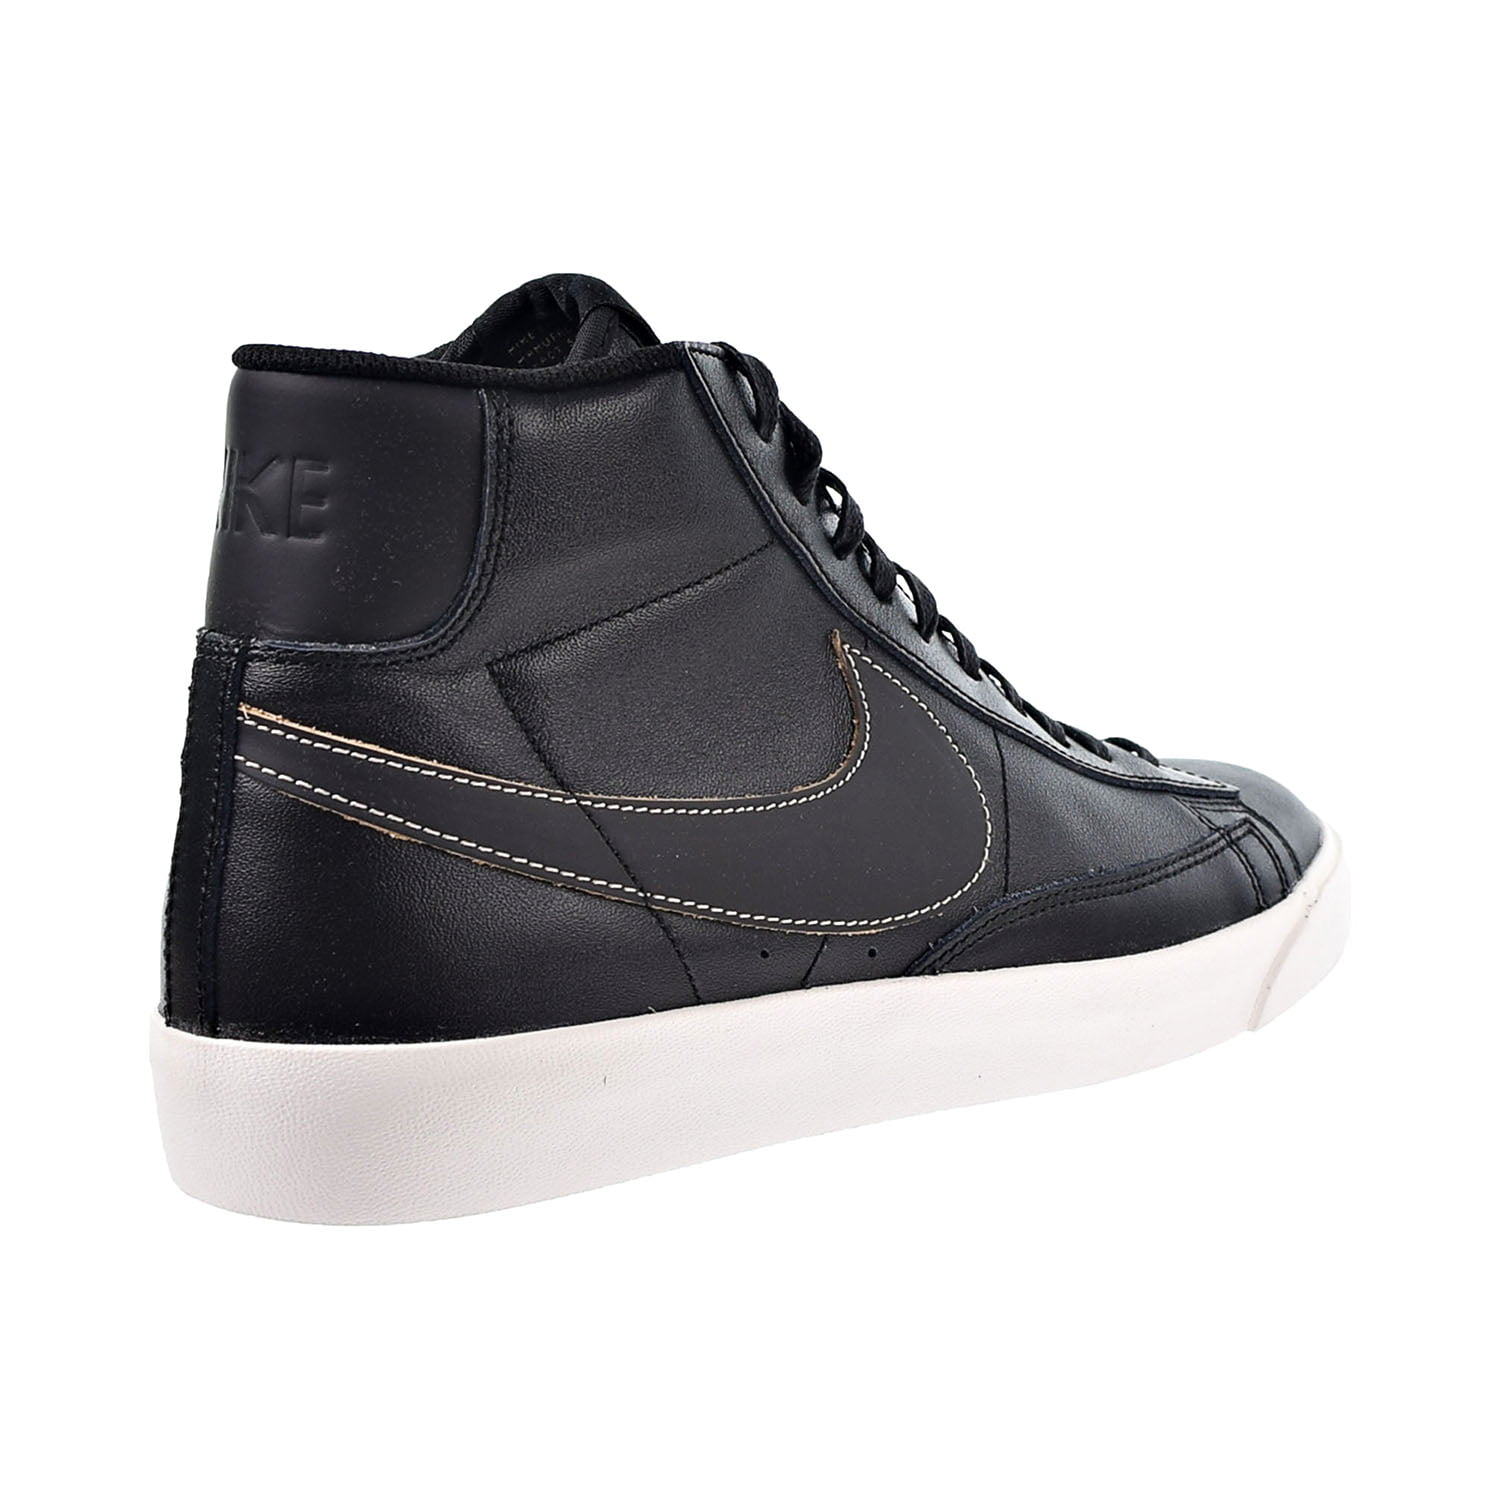 Blazer Mid Premium "Dark Patina" Men's Shoes Black-Vachetta Tan-Sail cu6679-001 - Walmart.com